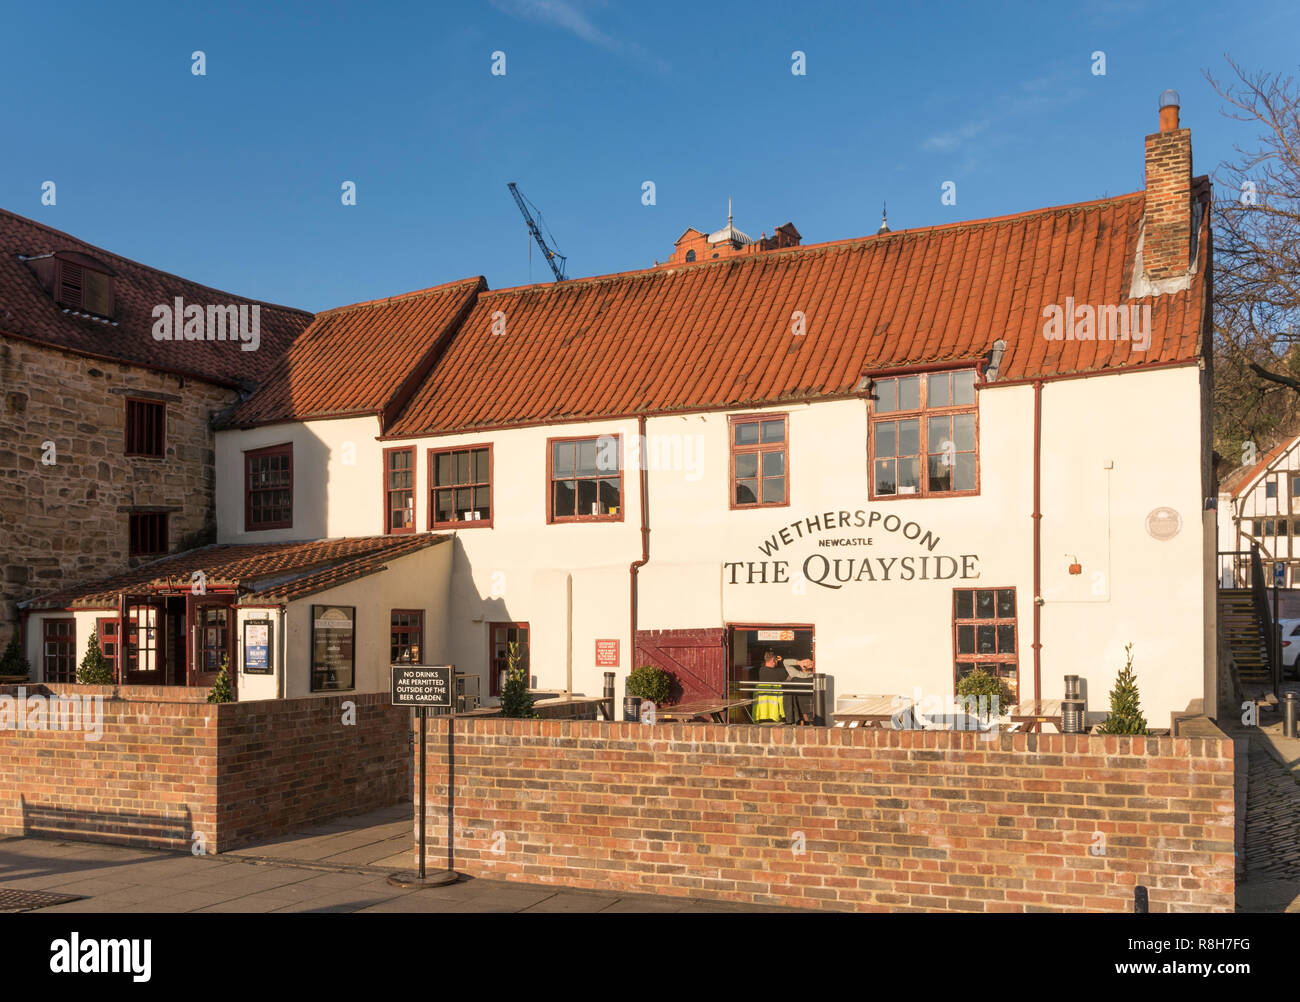 Wetherspoon pub, The Quayside in Newcastle upon Tyne, England, UK Stock Photo